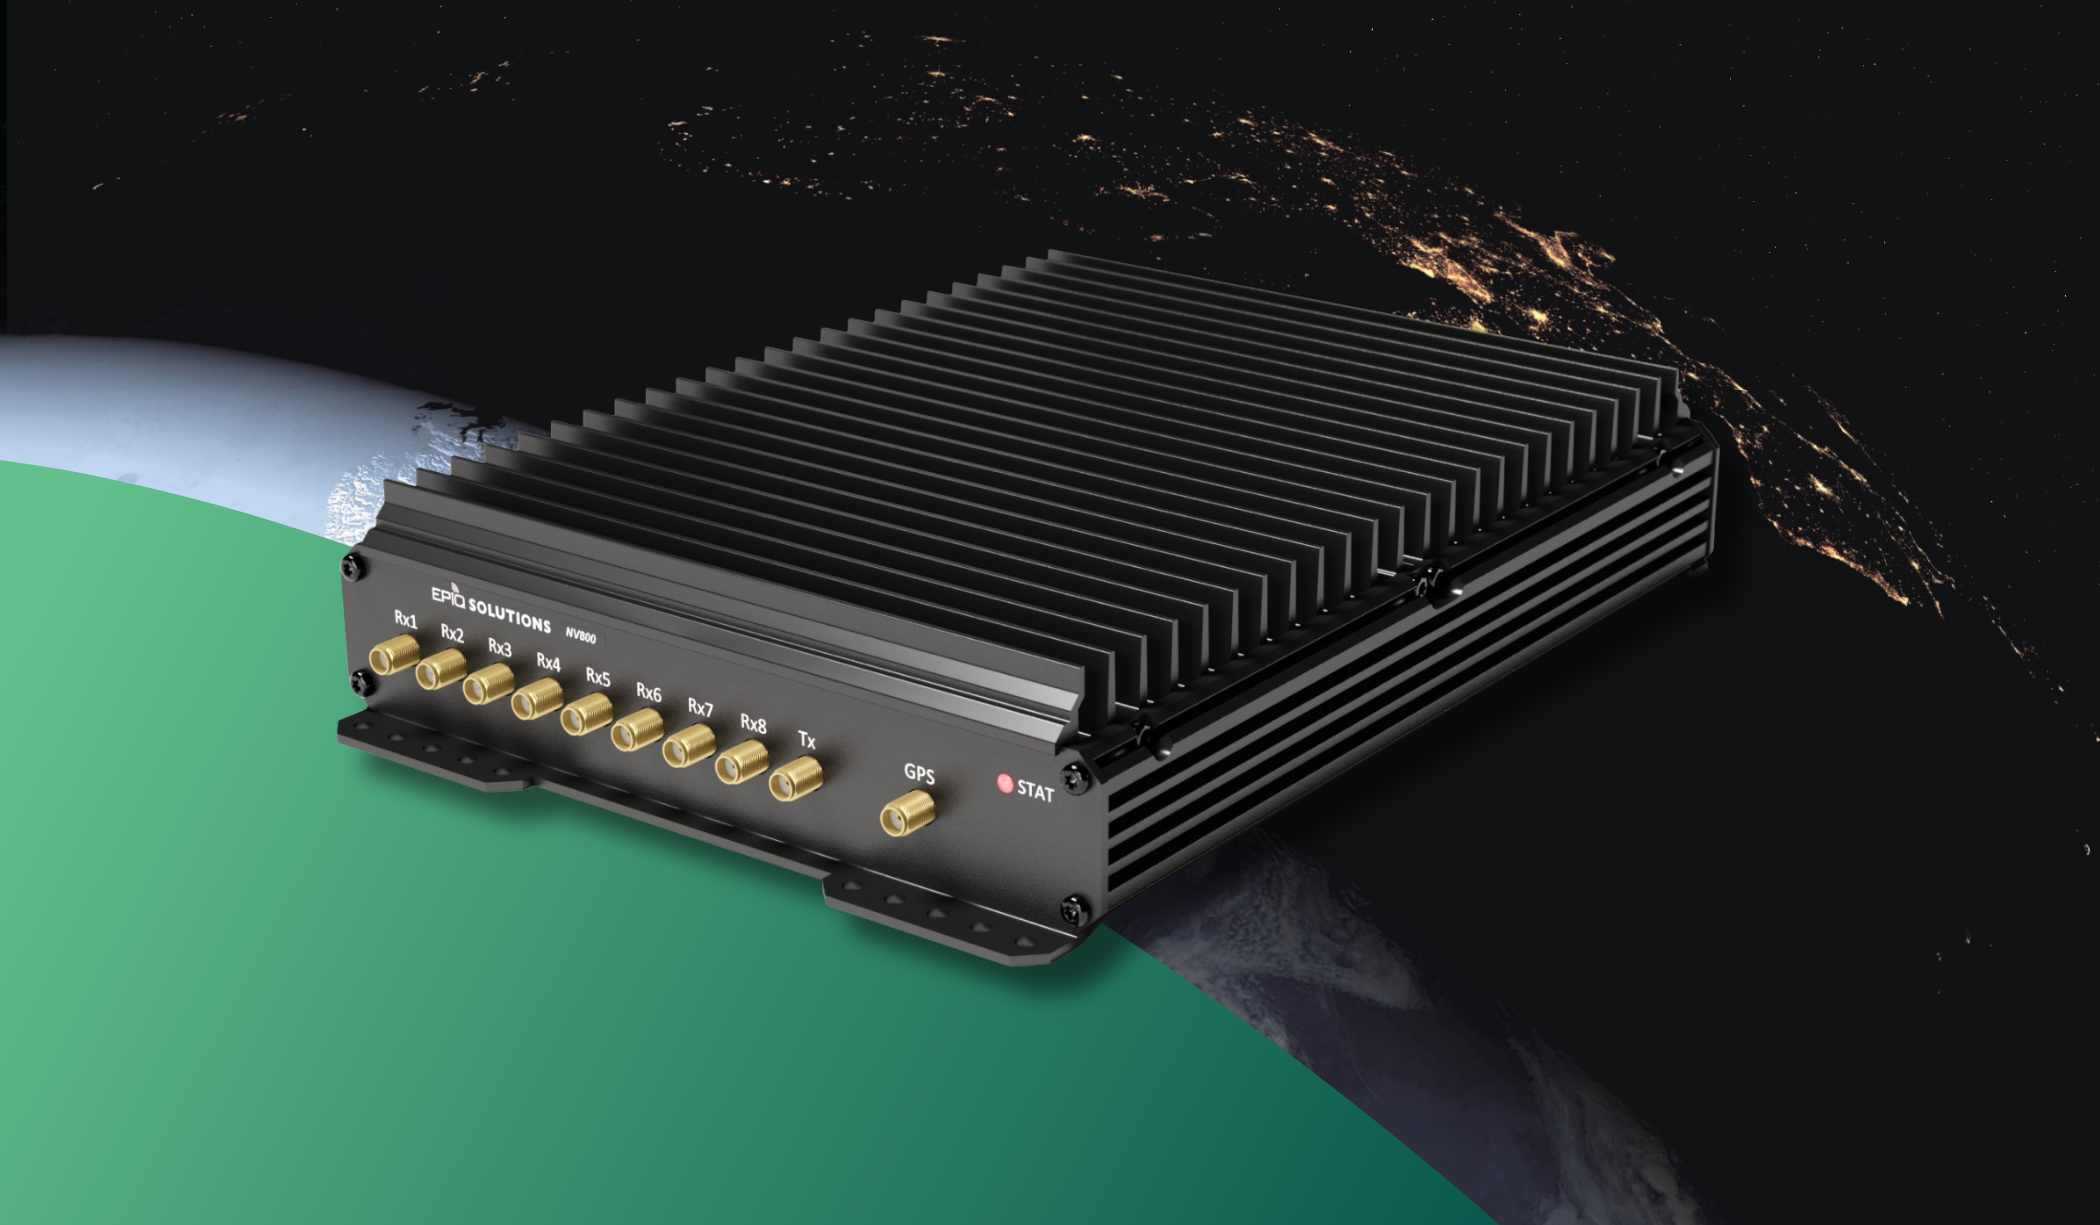 Introducing Sidekiq™ NV800: SDR for Advanced RF Spectrum Applications